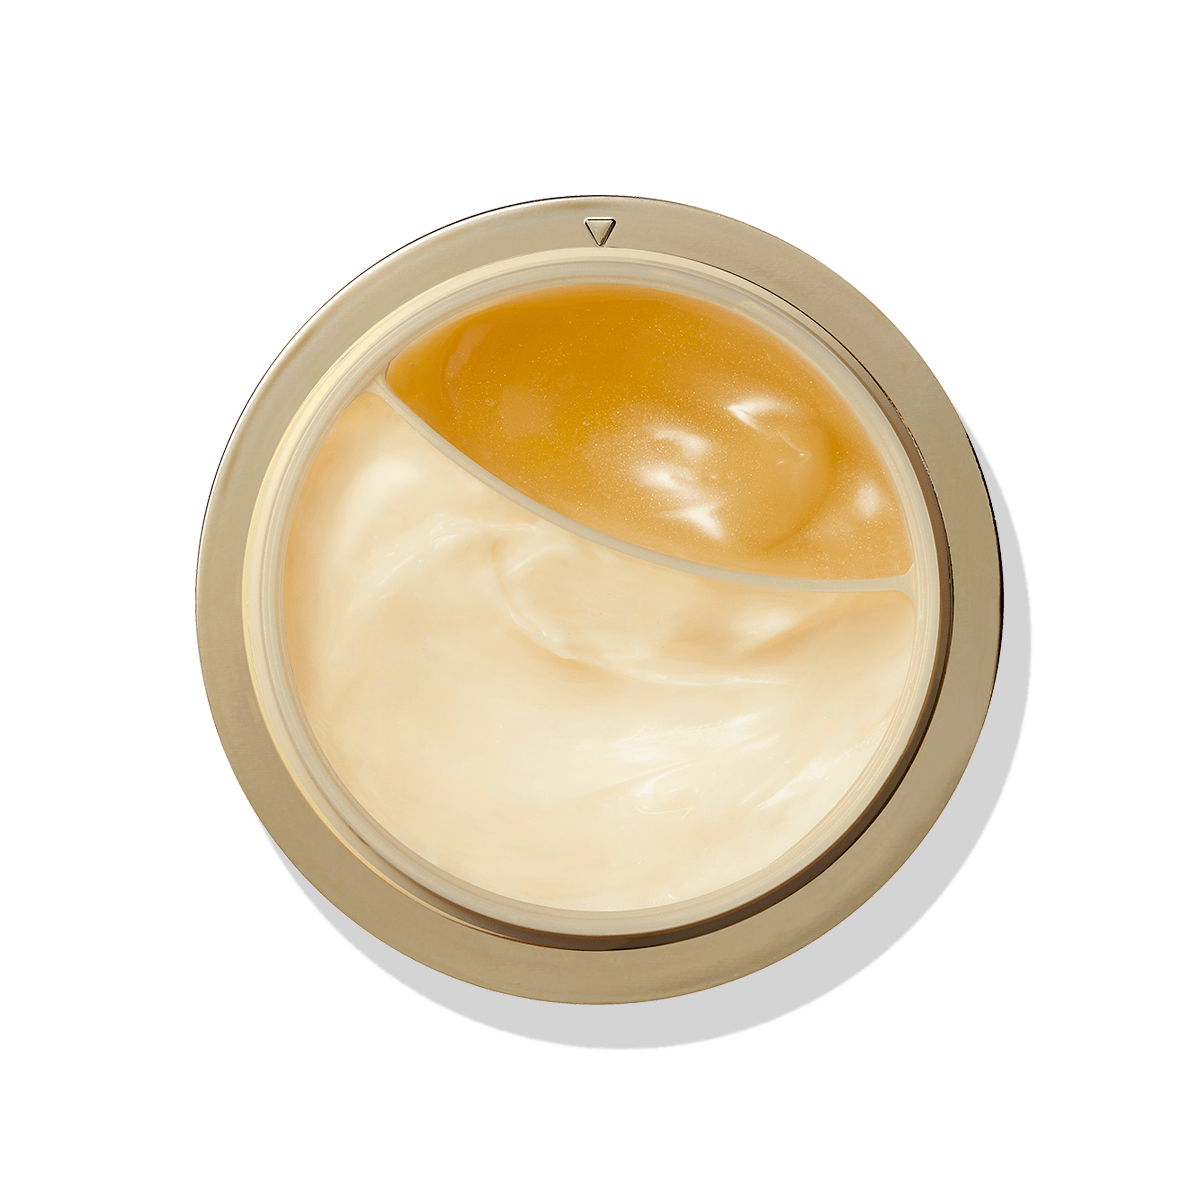 Kosé Infinity Prestigious Three-Dimensional Glossy Face Cream 50g